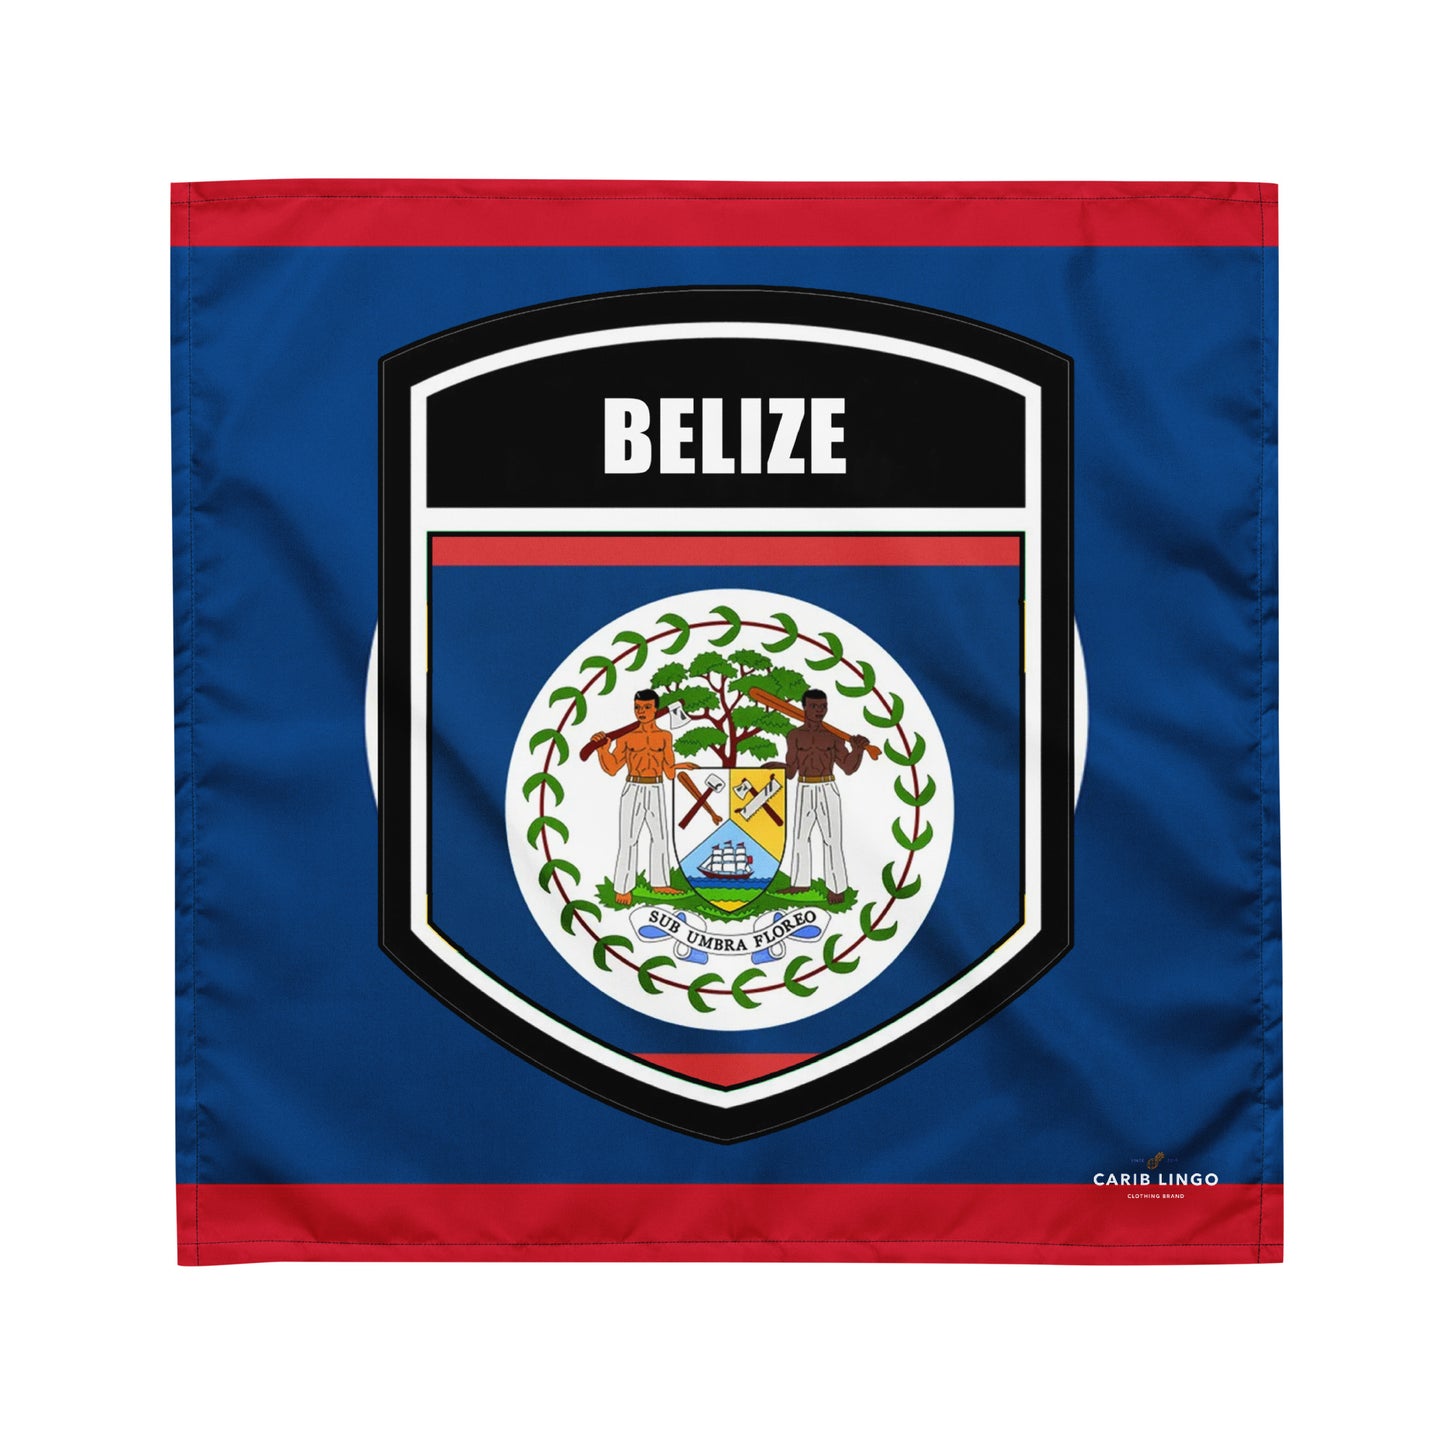 Belize bandana